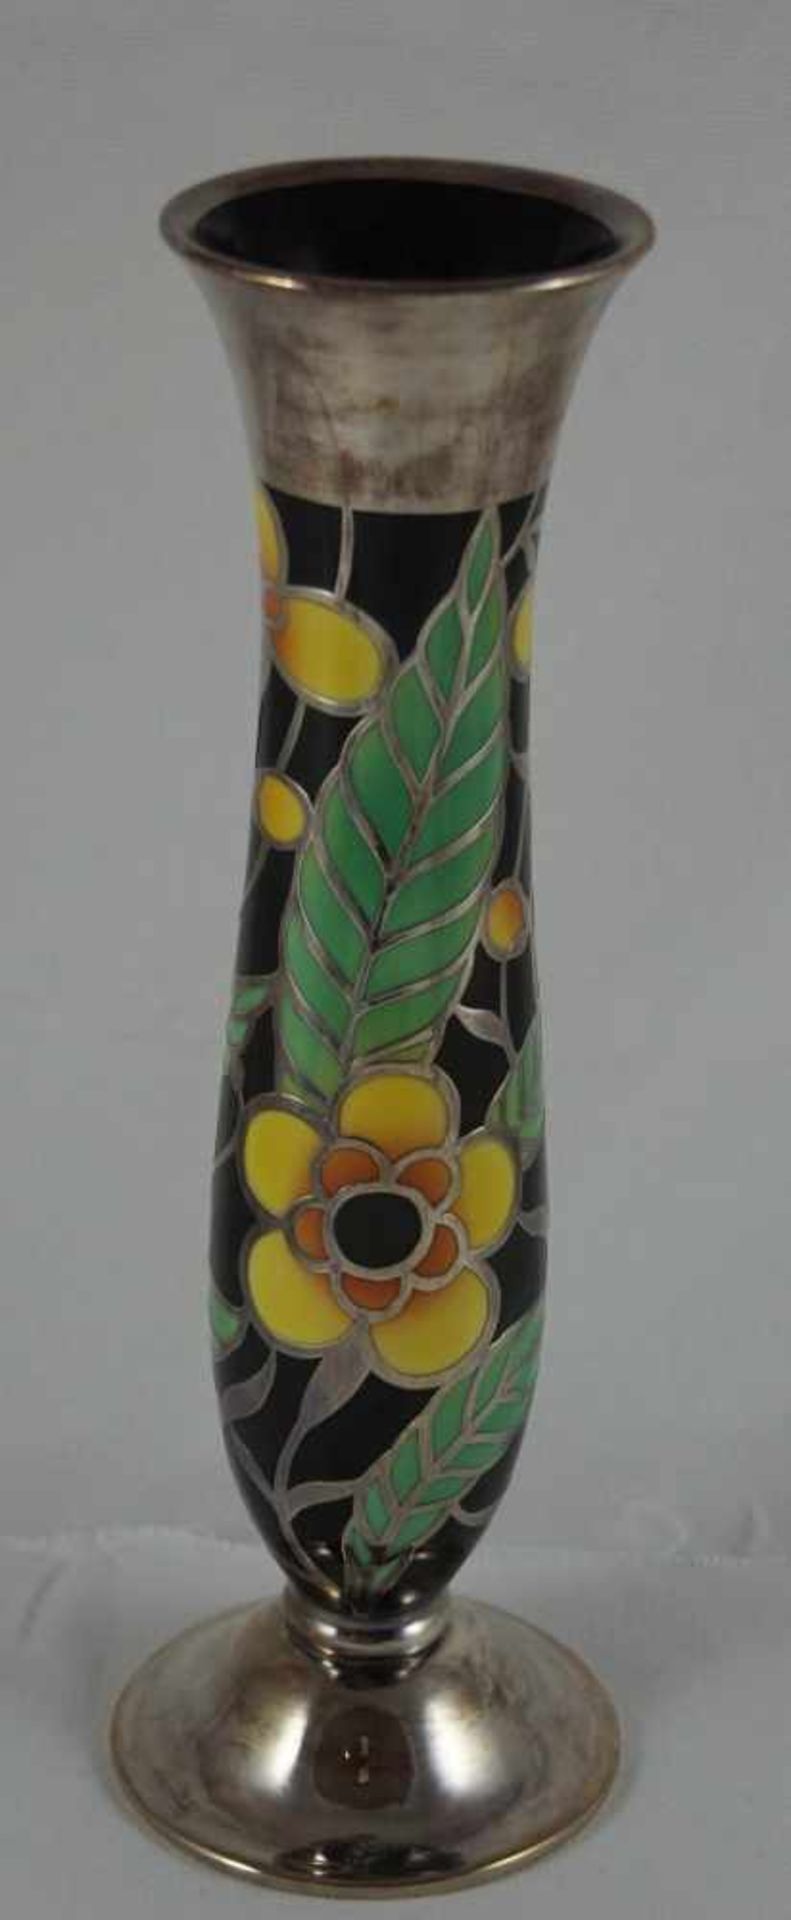 Fürstenberg Vase im Art-Deco-Stil Vase im Art-Deco-Stil, Fürstenberg, Höhe 31 cm, in sehr gutem